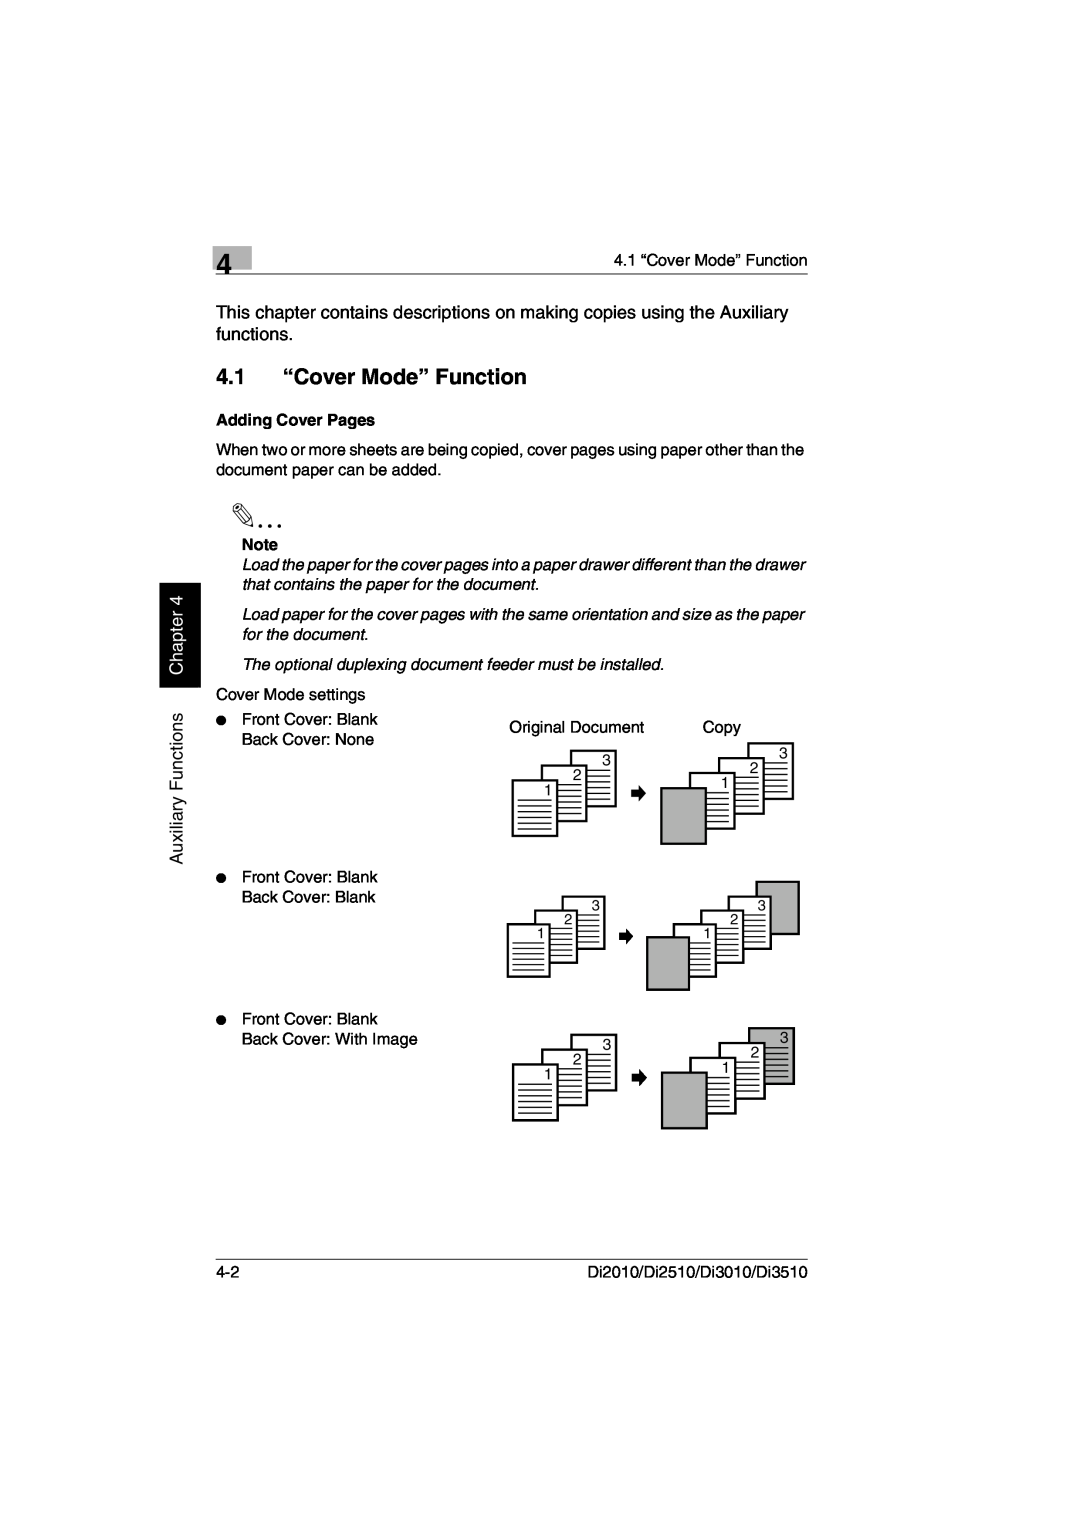 Minolta Di3510, DI2510, DI2010, DI3010 user manual 4.1 “Cover Mode” Function, Chapter, Auxiliary Functions 